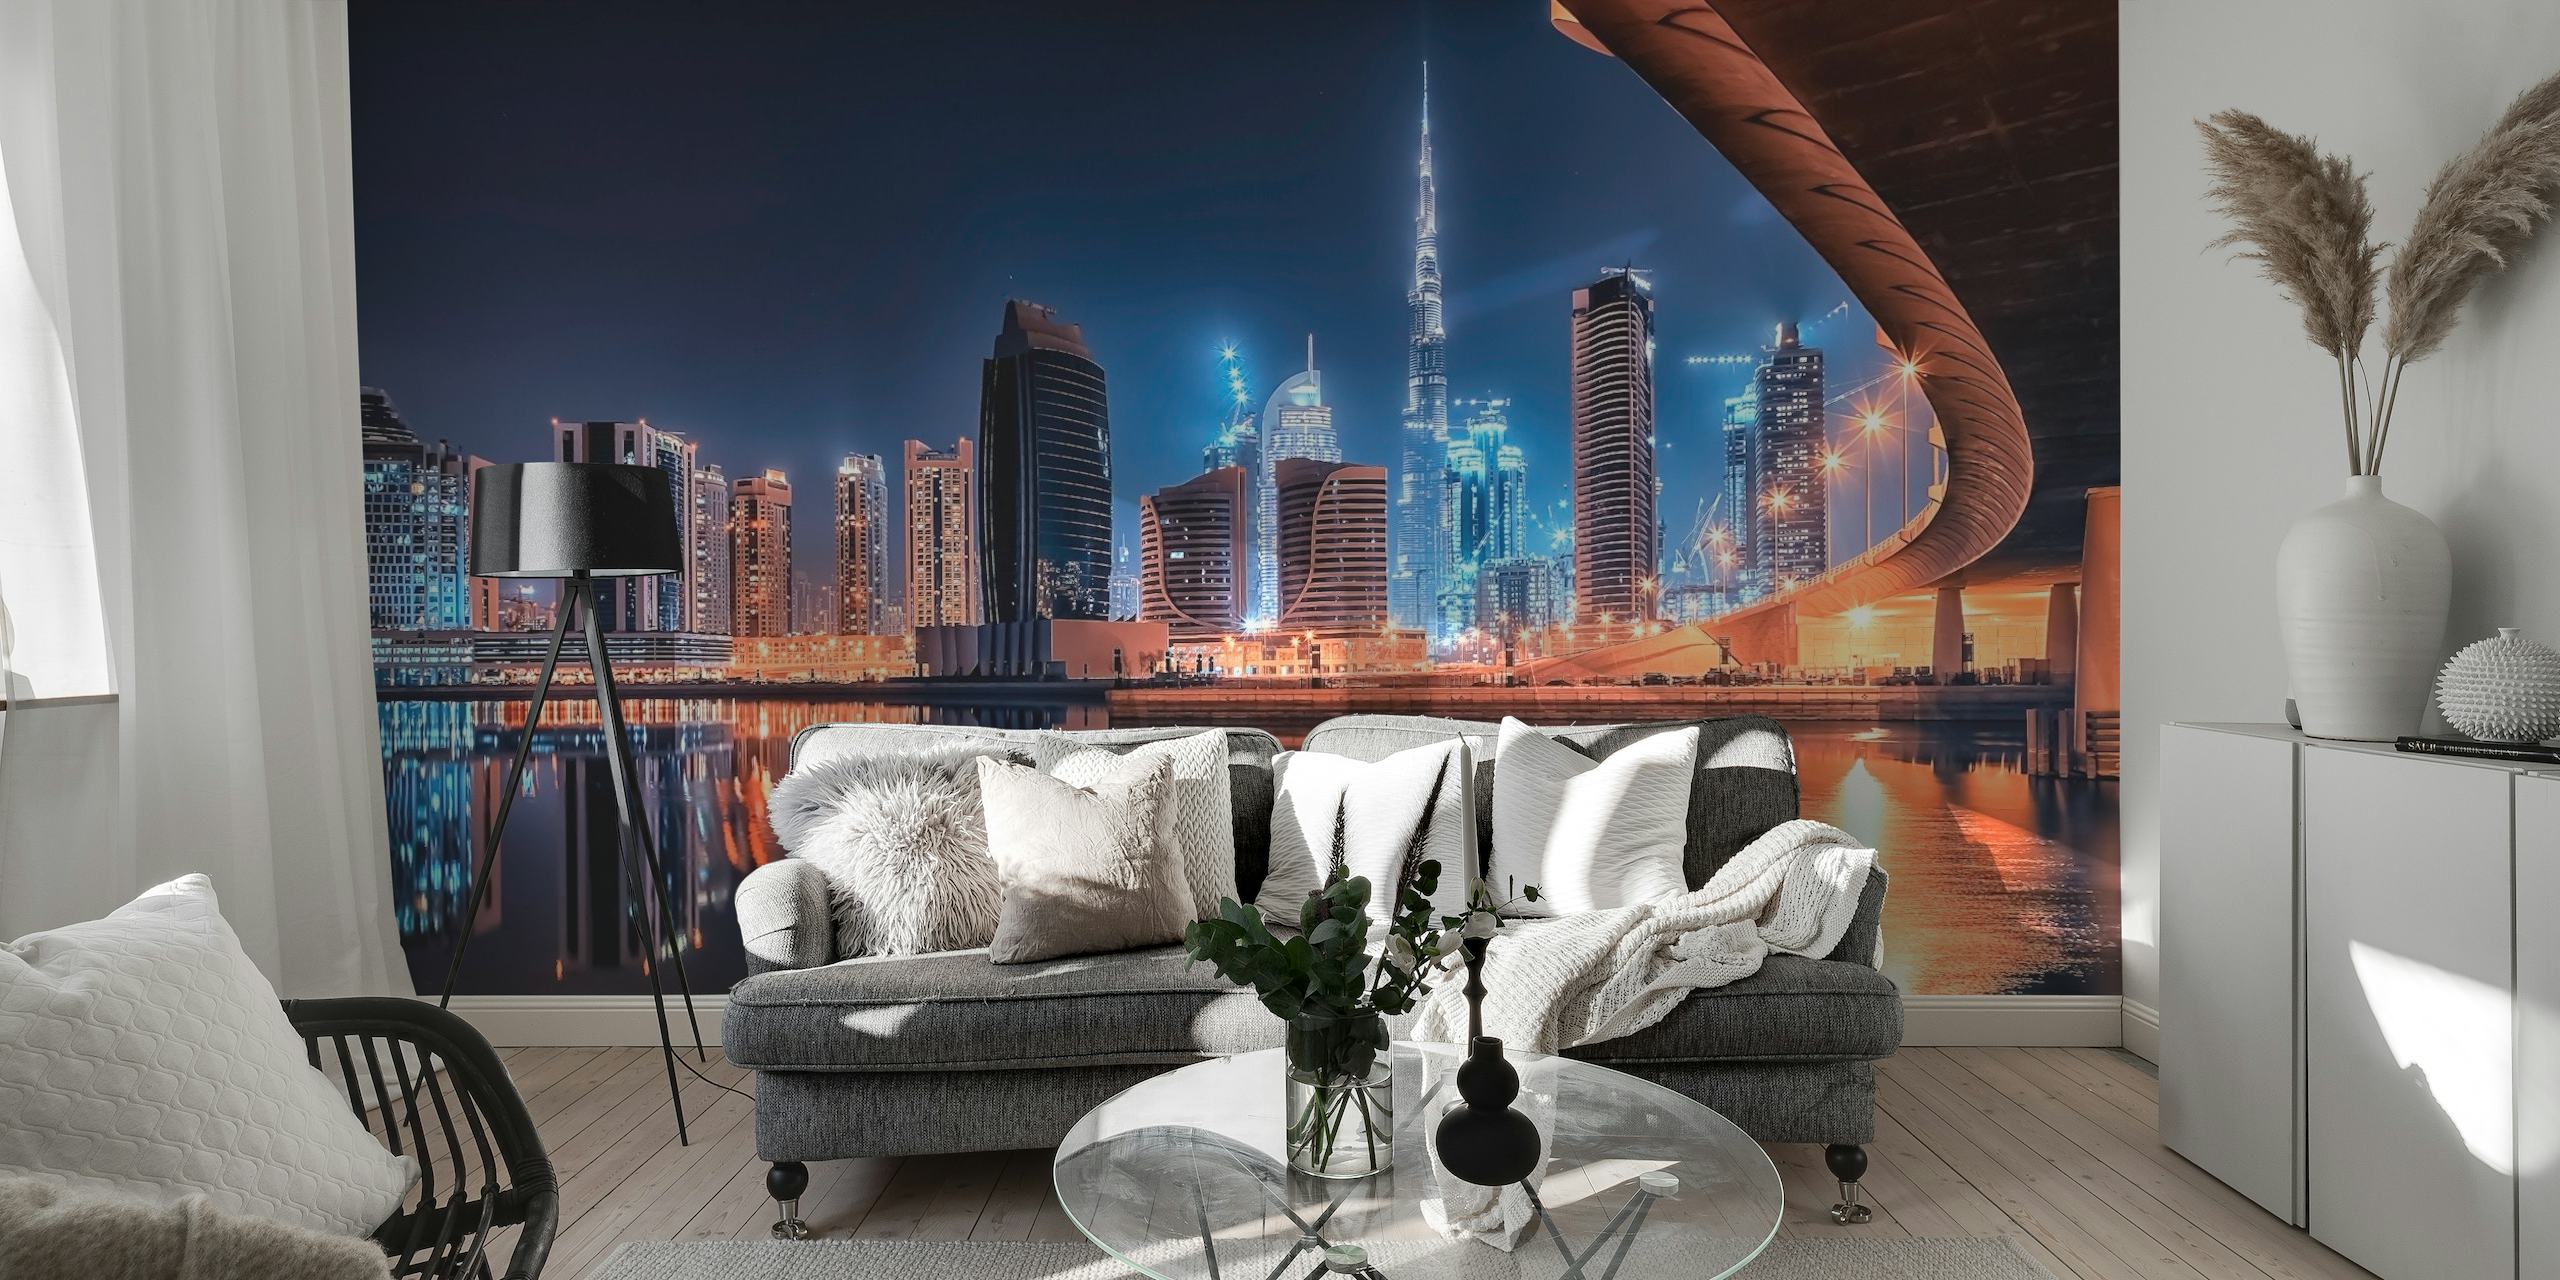 Dubai By Night wallpaper